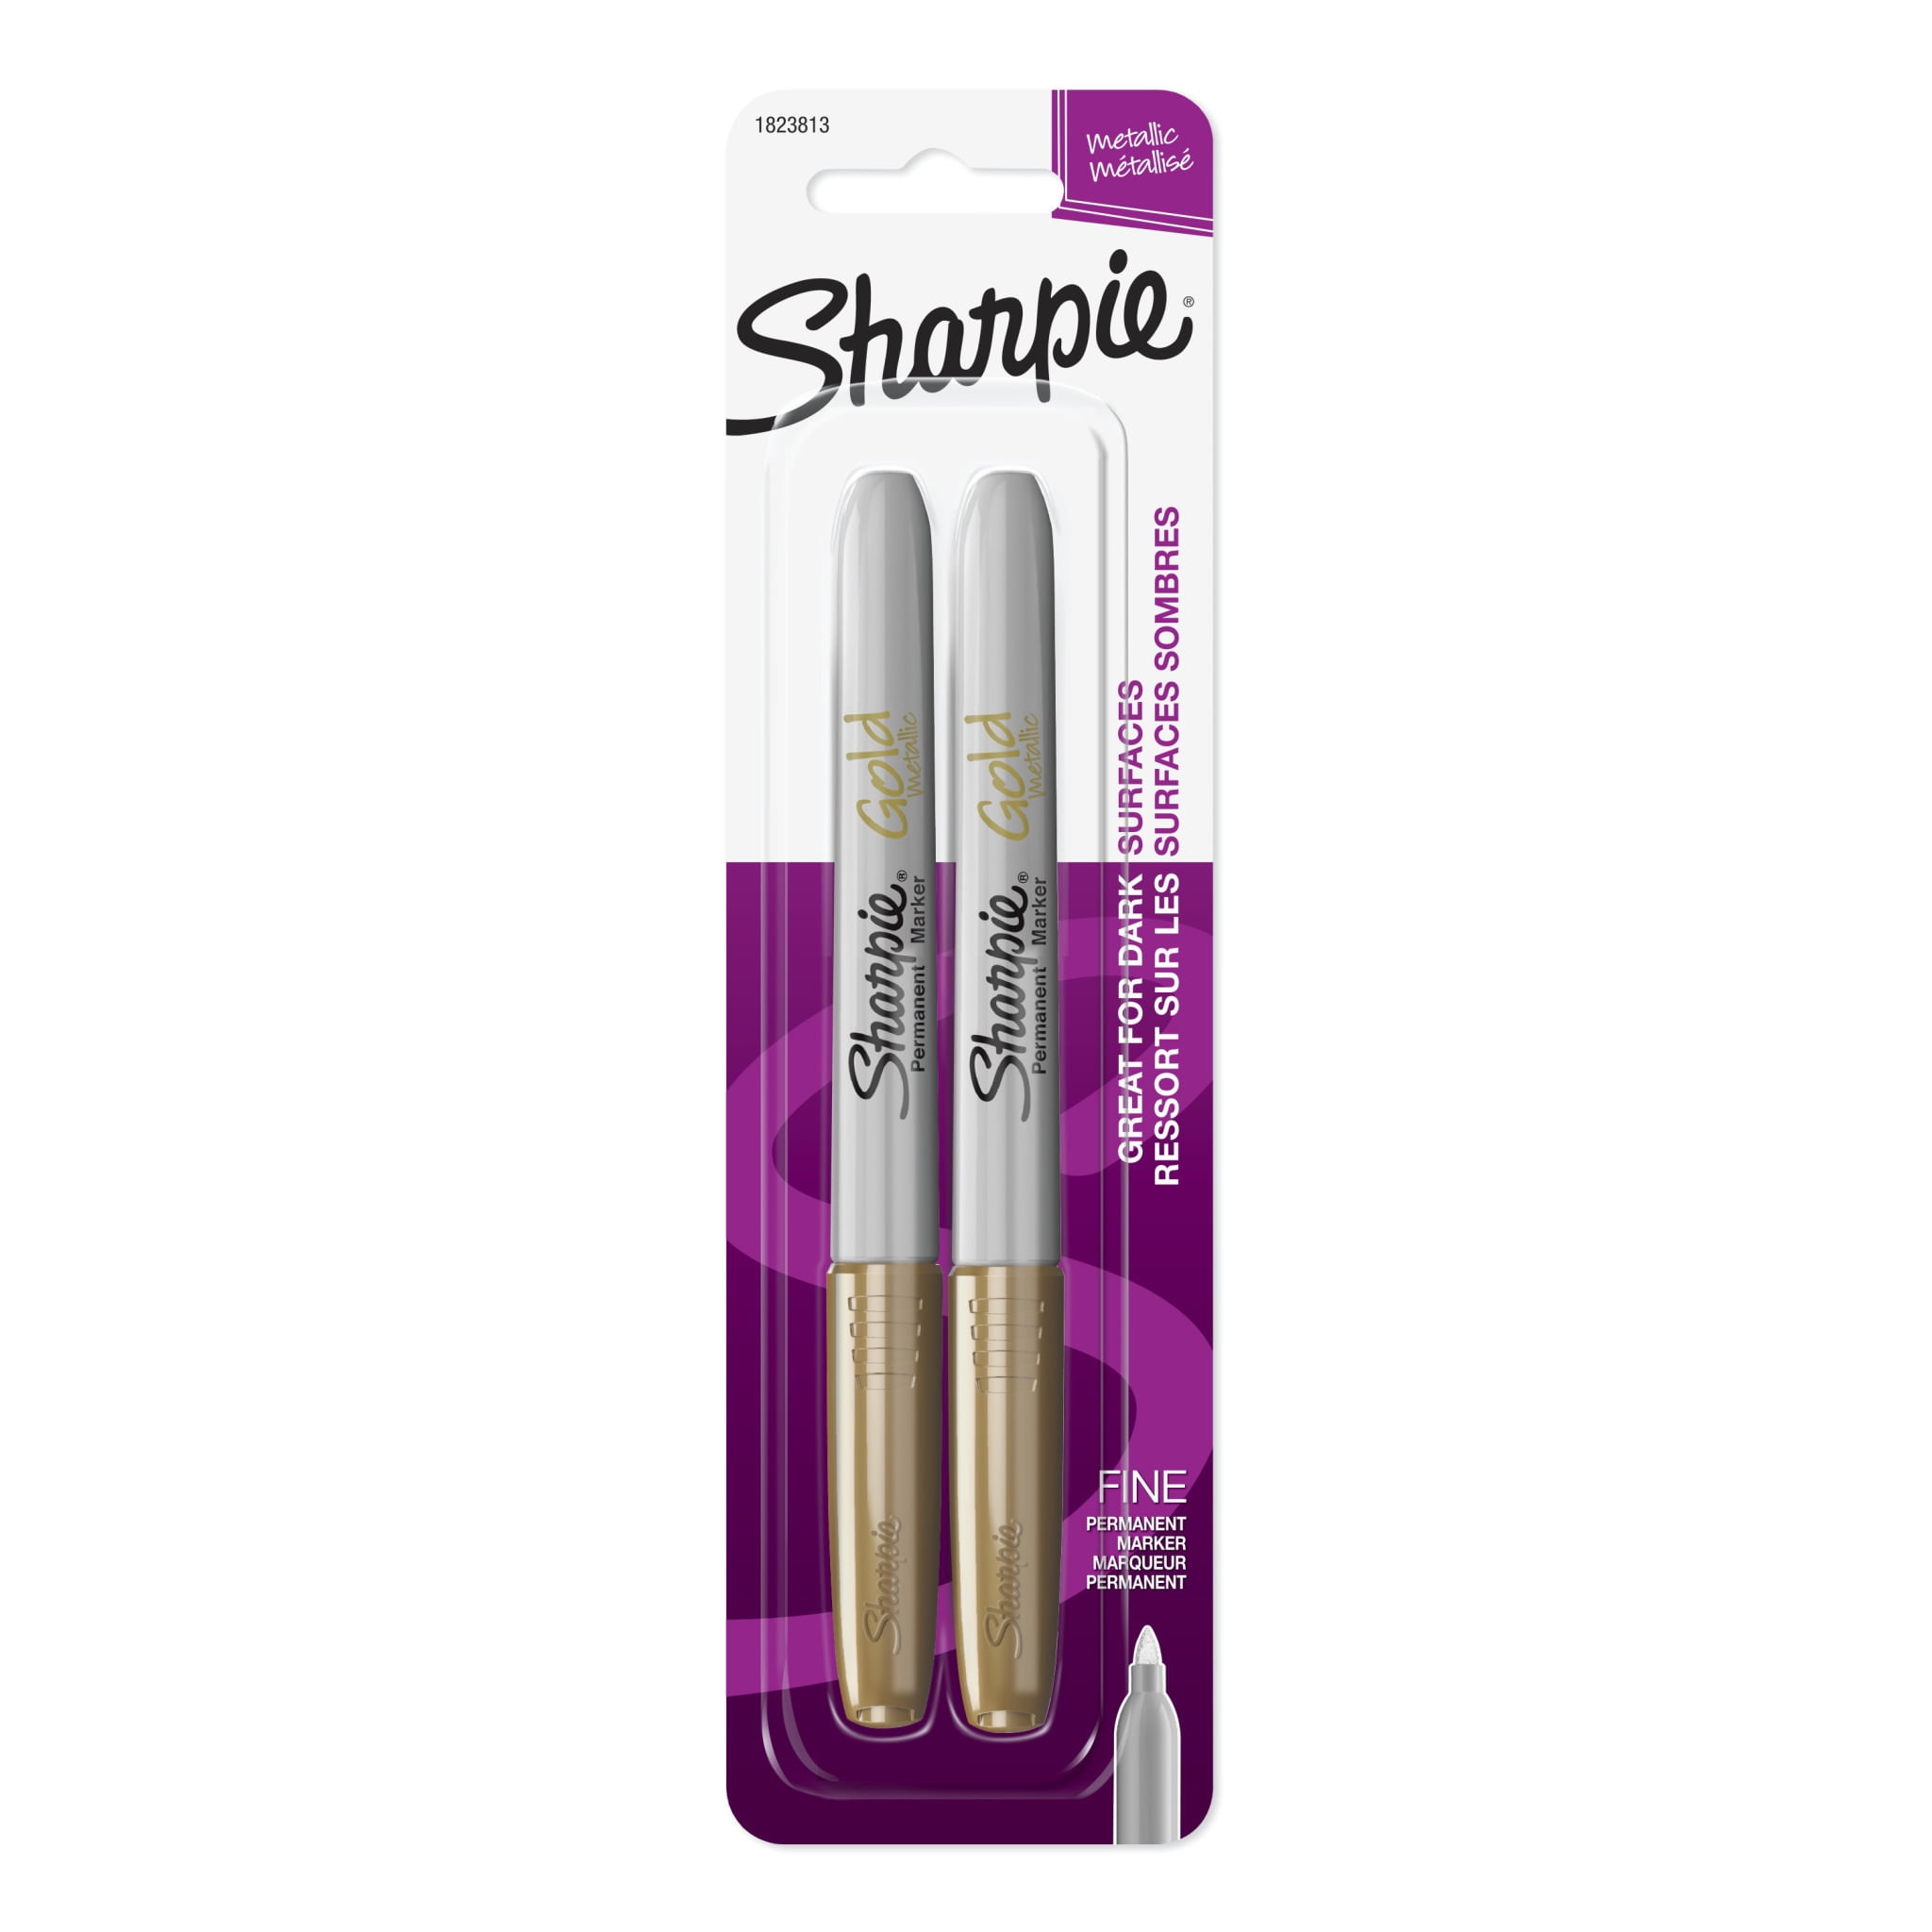 2 Colors Gold Silver Metallic Brush Marker Pen Waterproof Water